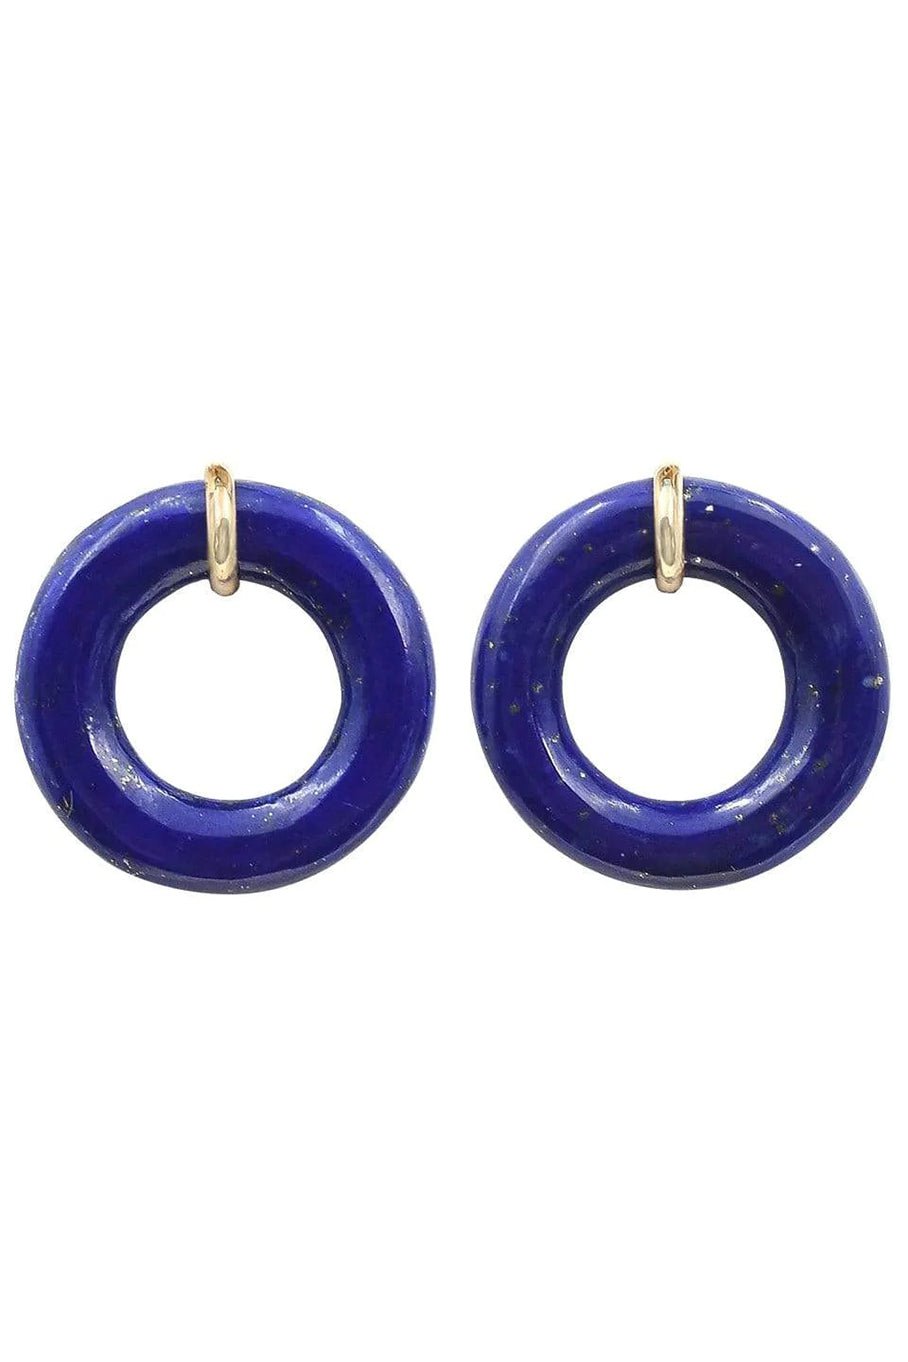 BONDEYE JEWELRY-Blueberry Glazed Munchkin Earrings-YELLOW GOLD